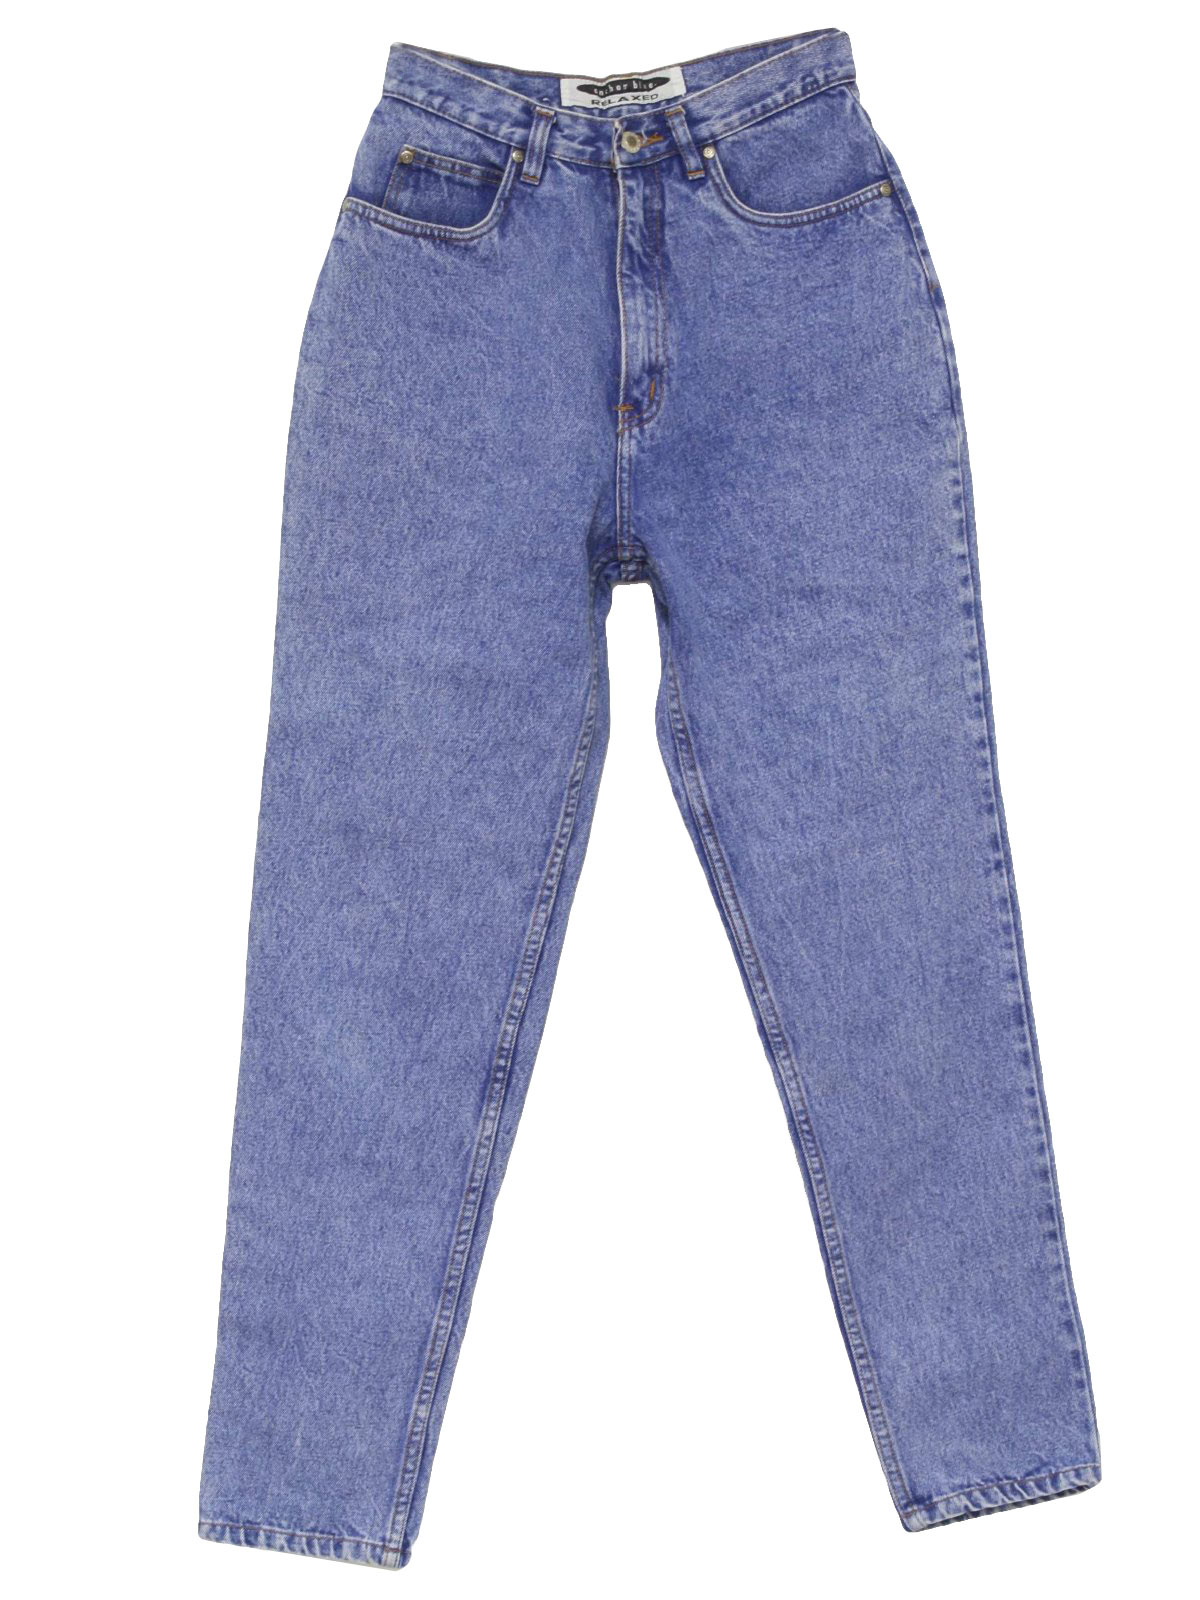 Retro 1980's Pants (Anchor Blue) : 80s -Anchor Blue- Womens medium blue ...